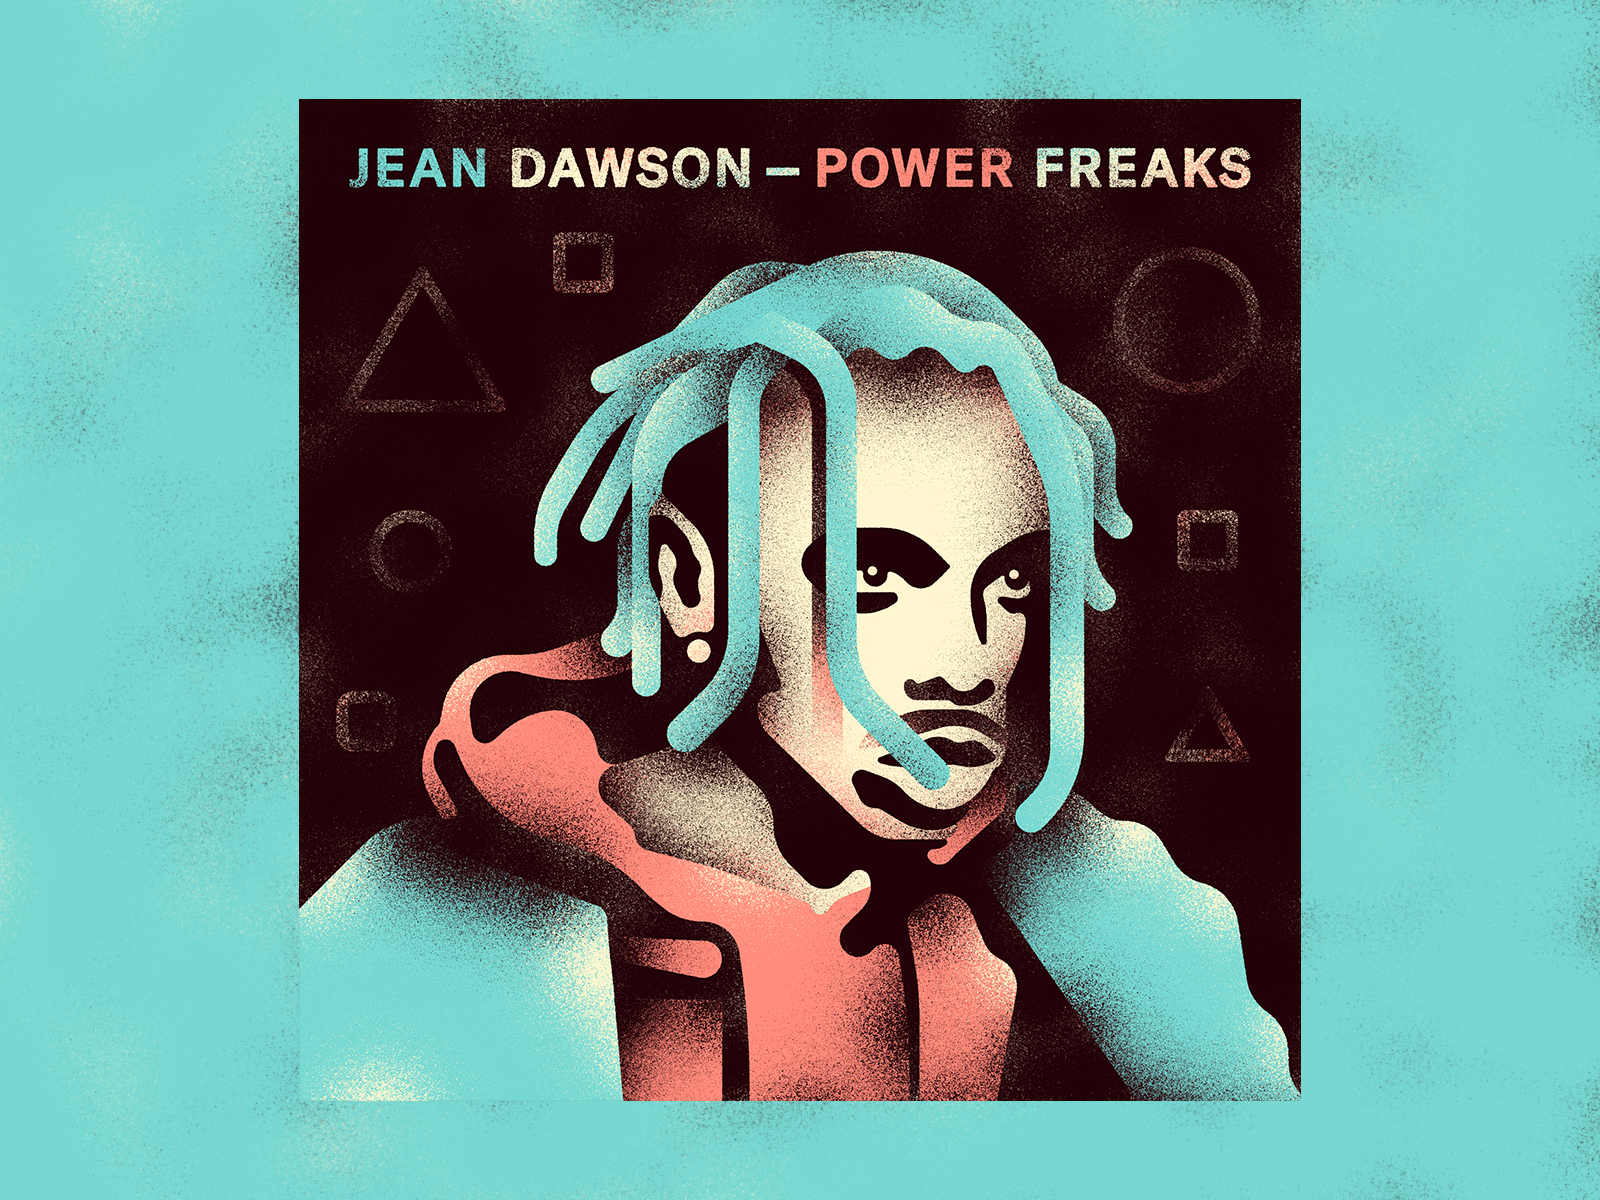 9. Power Freaks man person portrait 2020 cover art song music vinyl album jean dawson